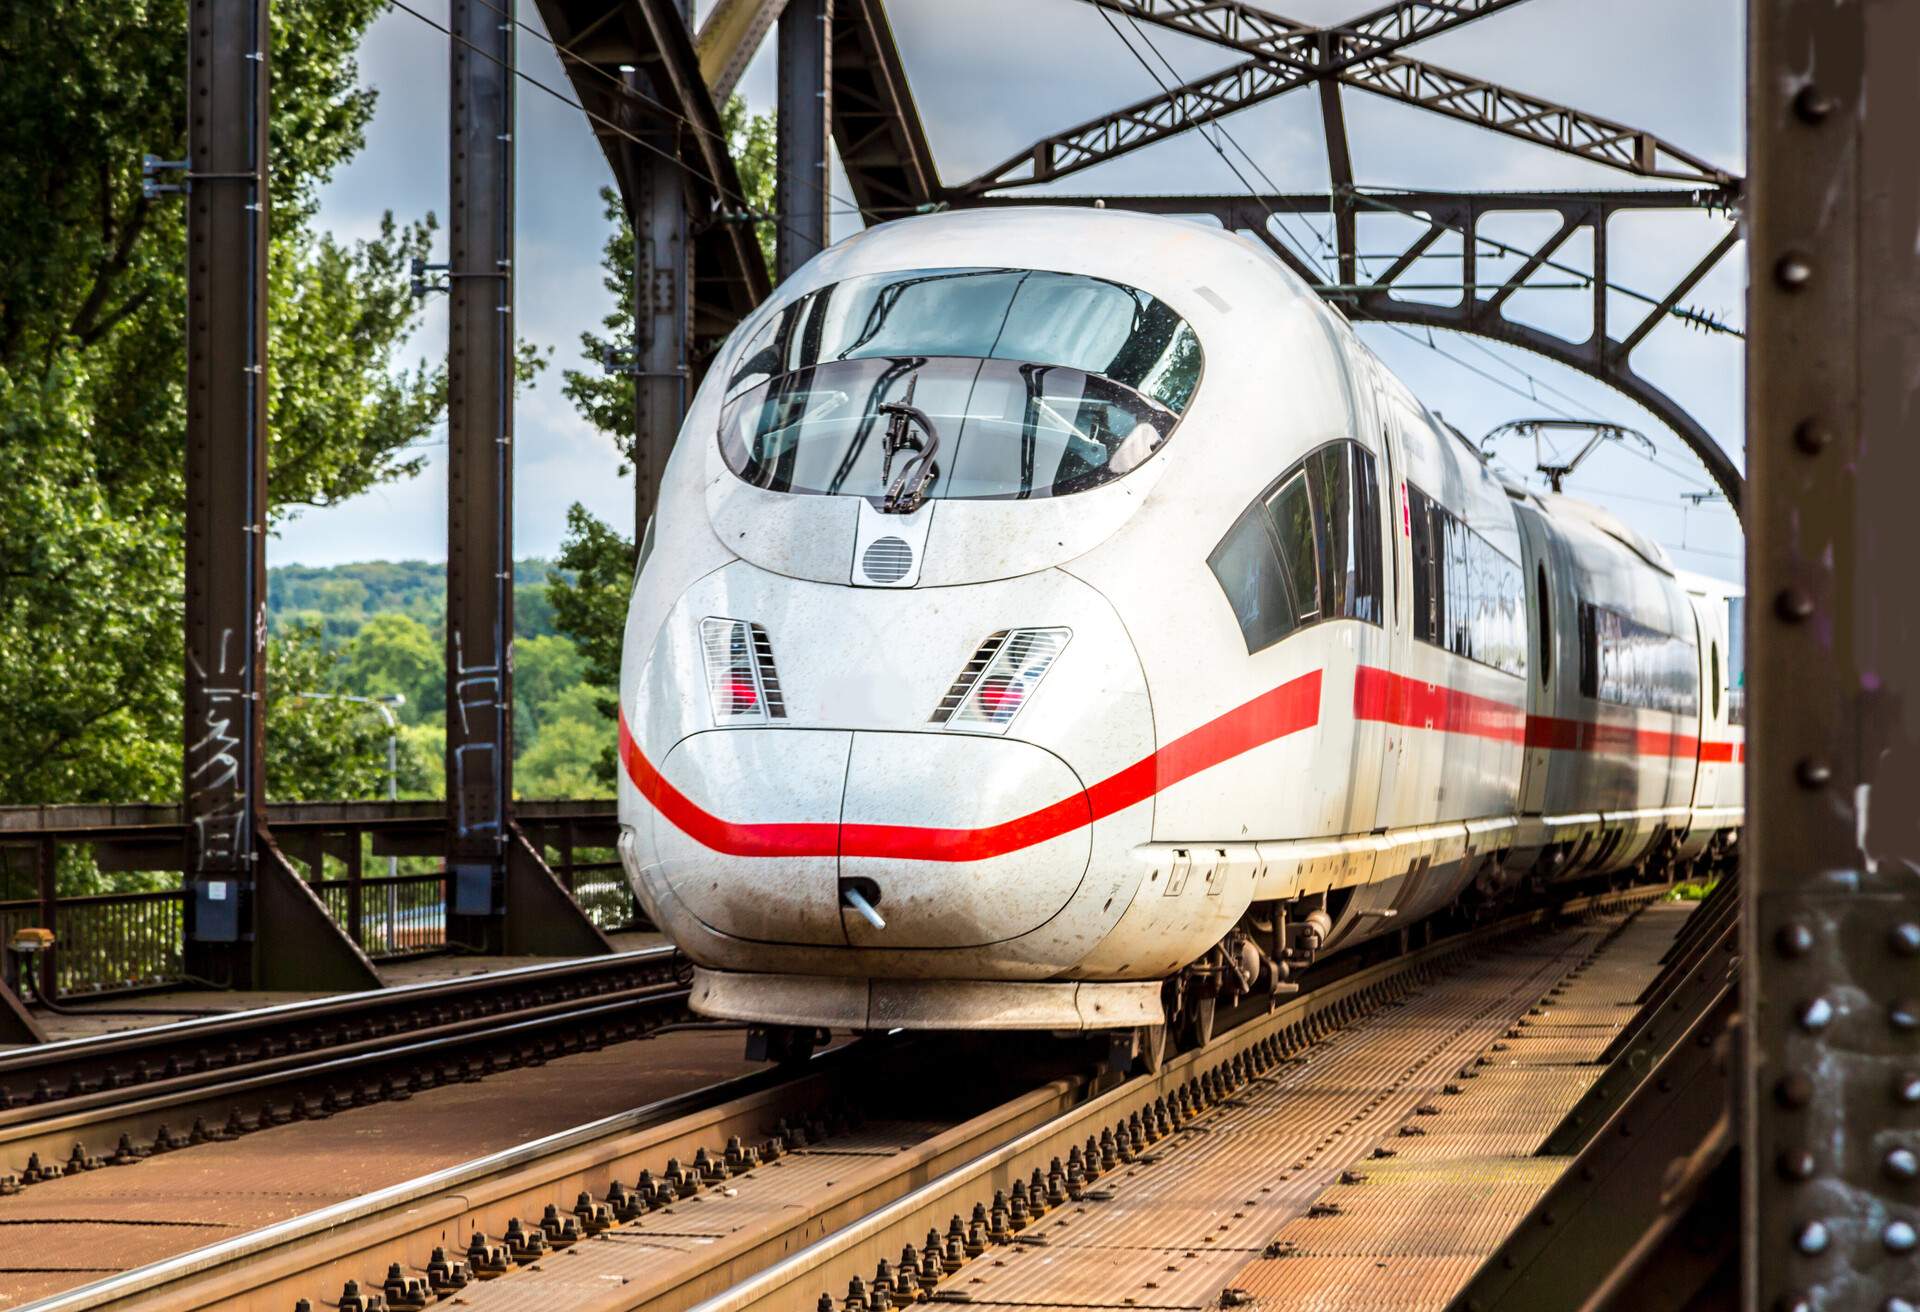 dest_germany_frankfurt_intercity-express_theme_train_transportation-shutterstock-portfolio_243159148_universal_within-usage-period_63701.jpg